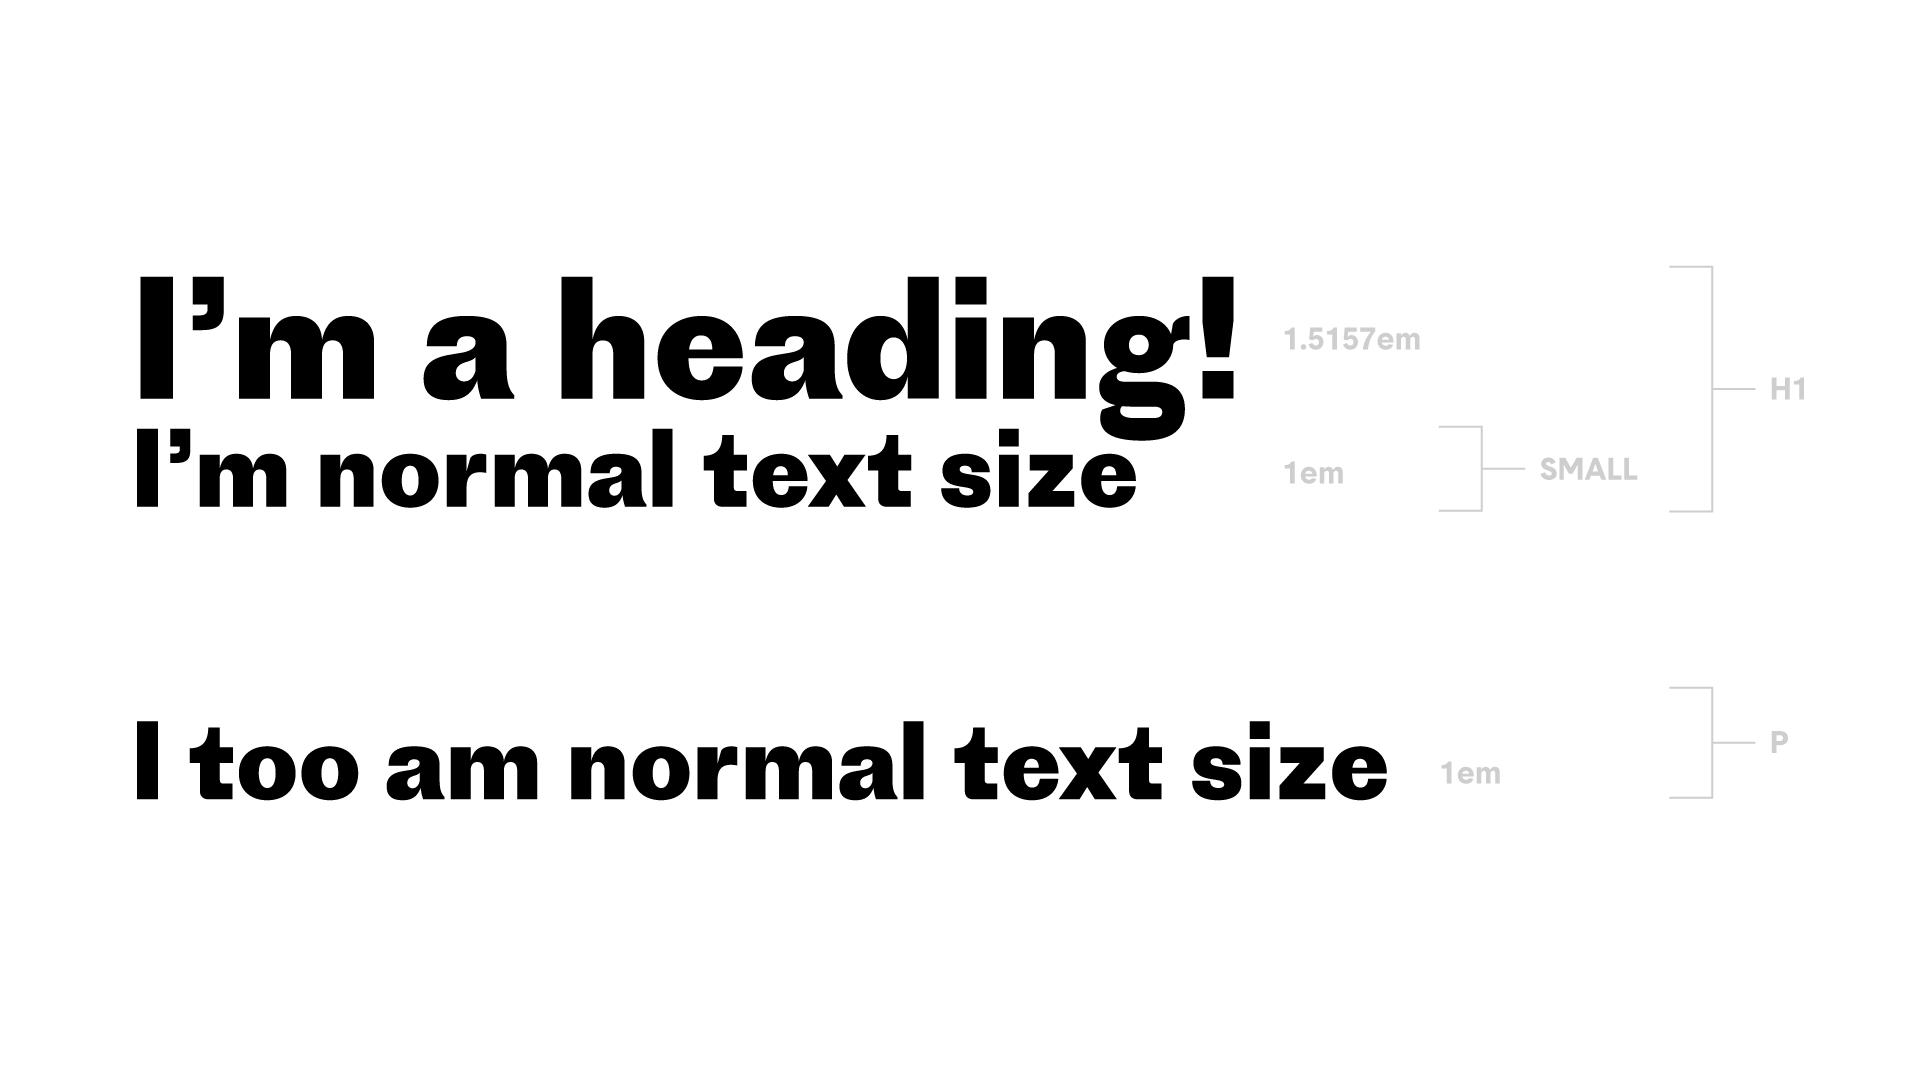 Font Size Matters A Lot